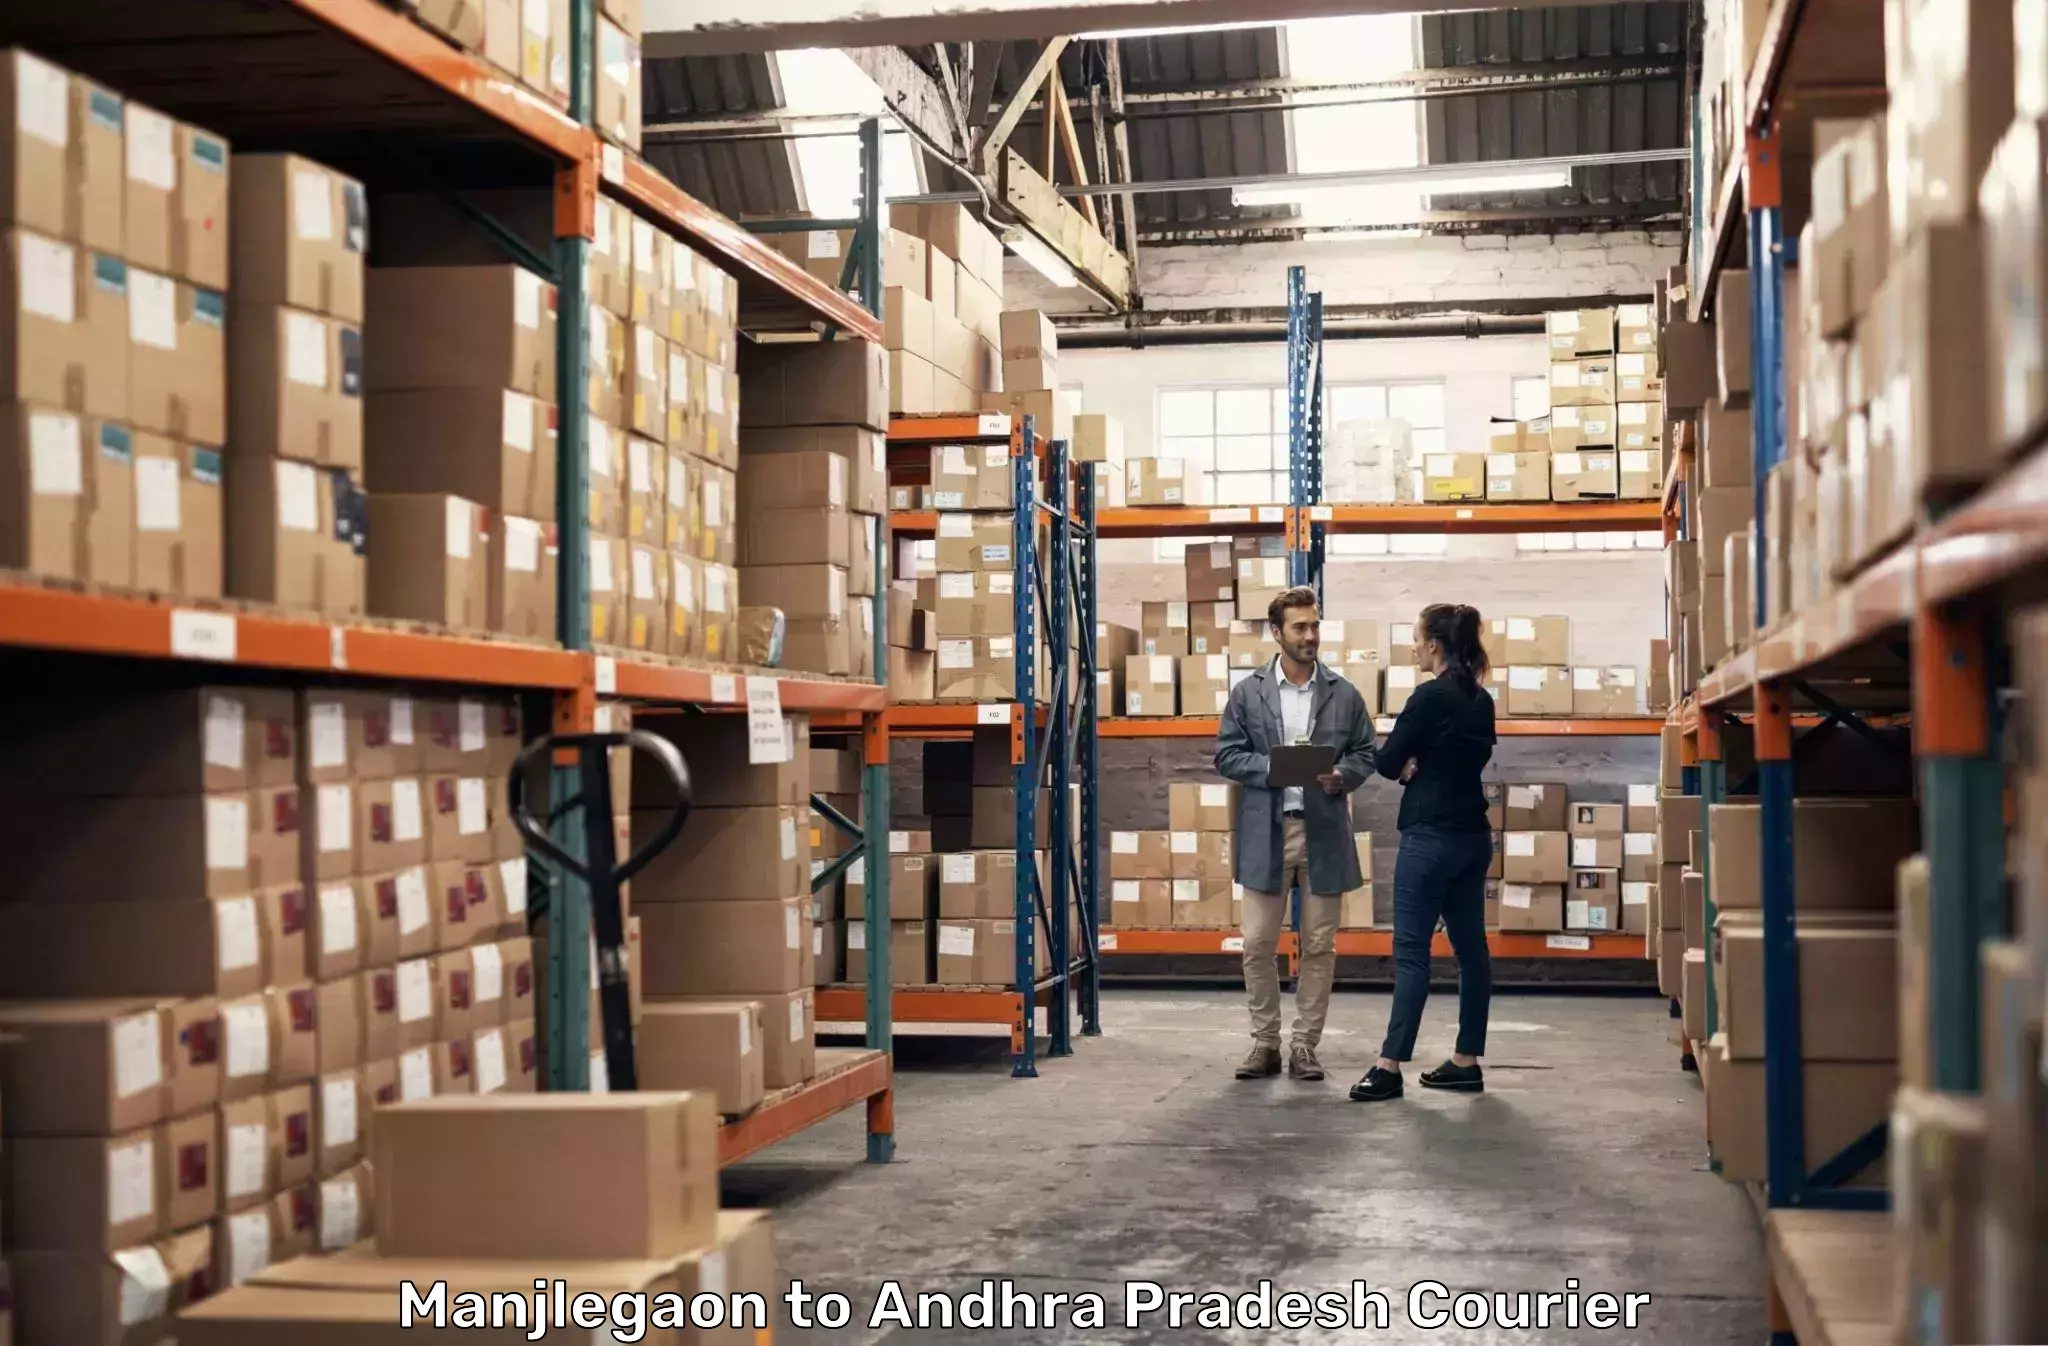 Flexible delivery schedules Manjlegaon to Visakhapatnam Port